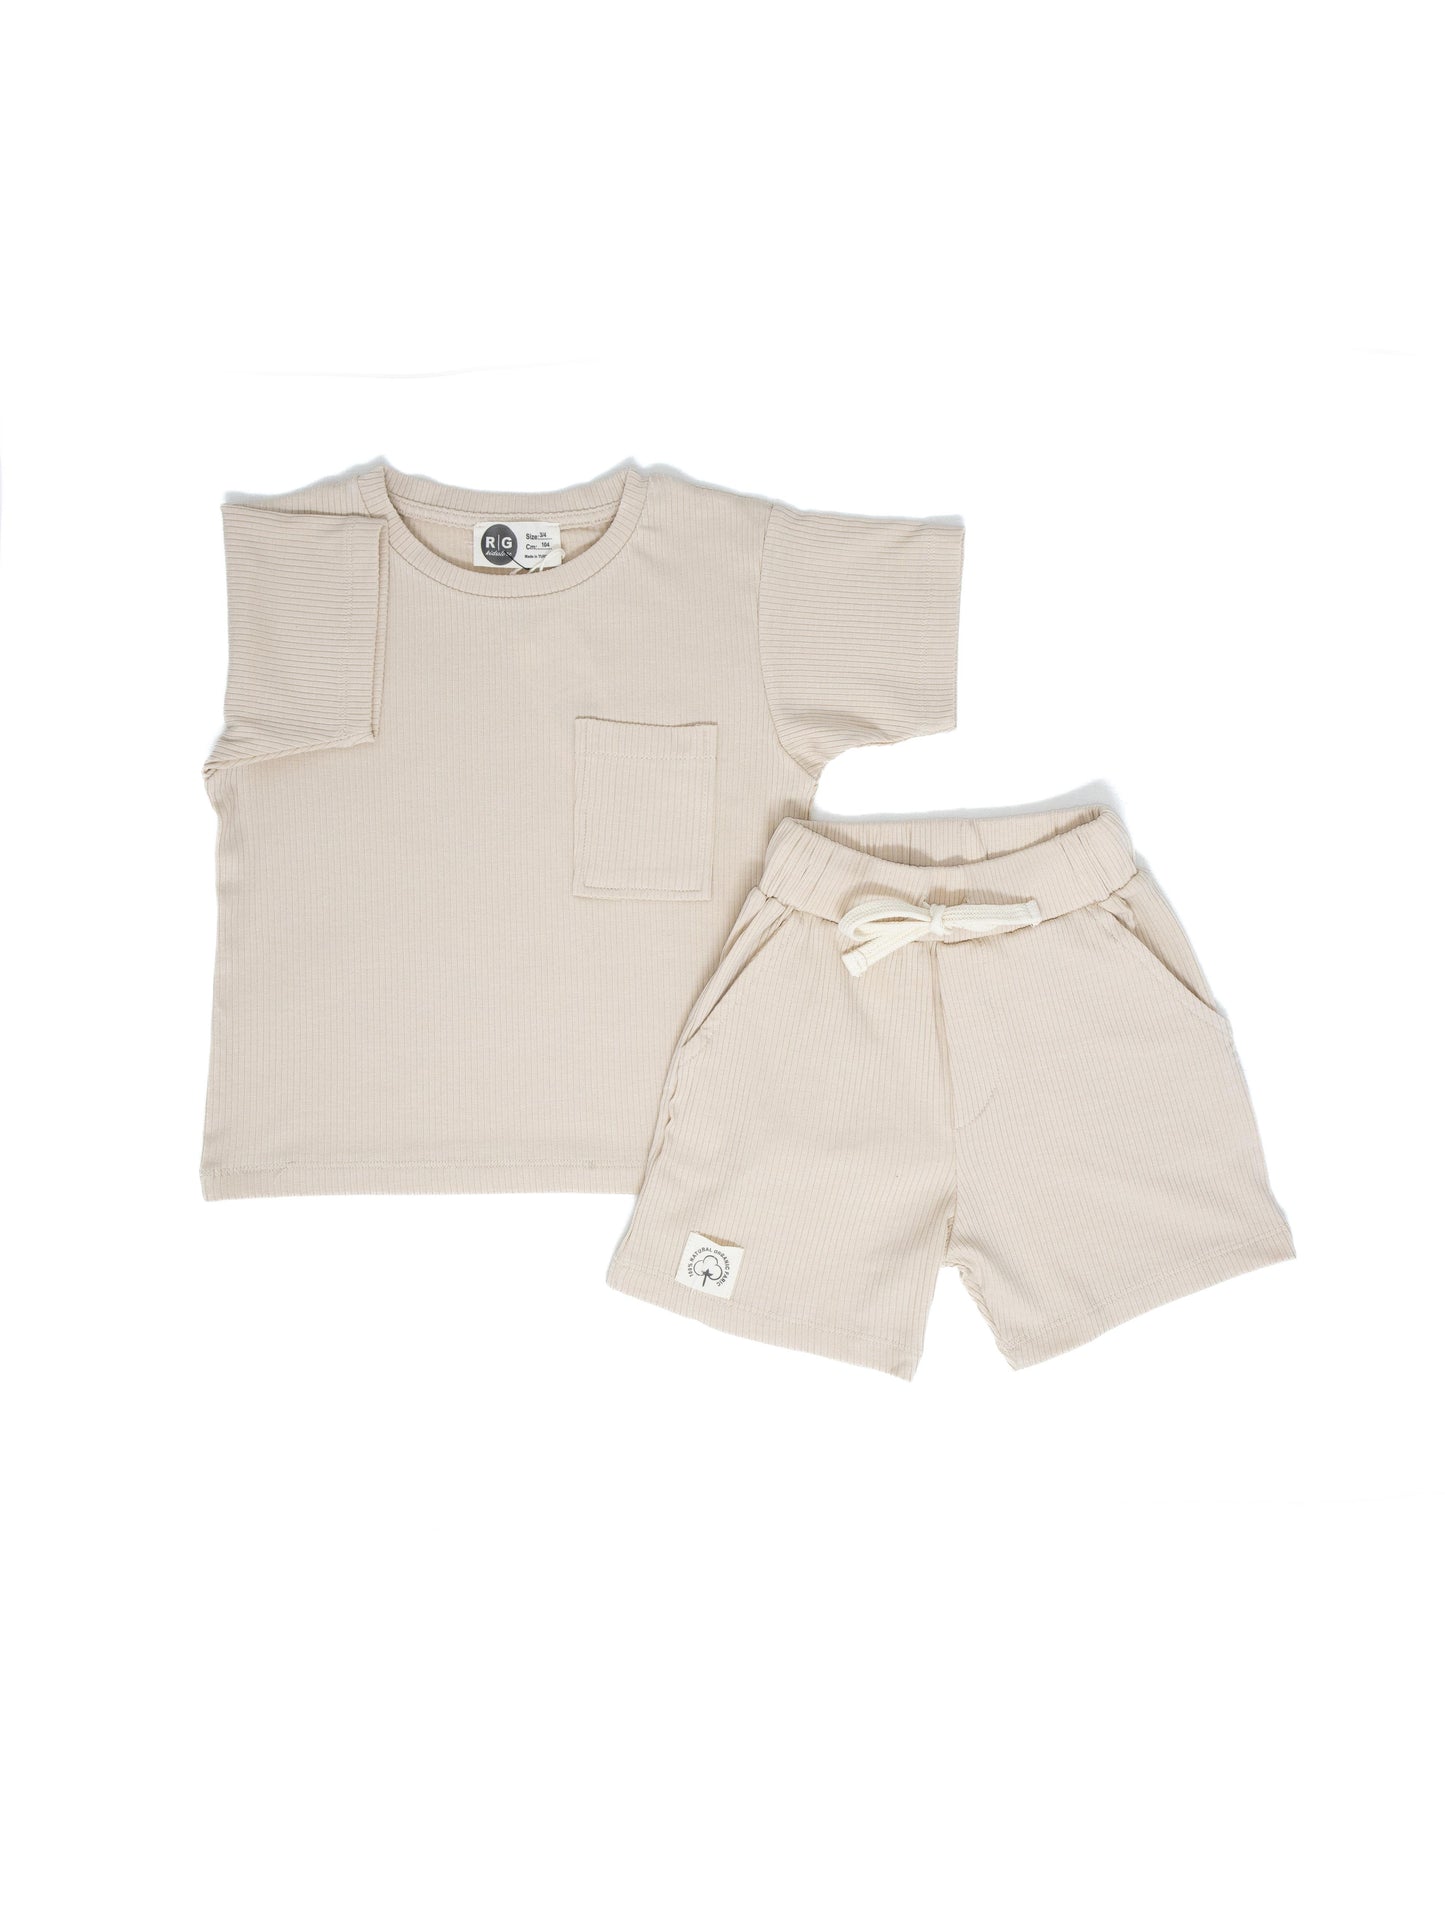 Unisex Children's 100% Lyocell Cotton Fabric T-Shirt-Shorts Set